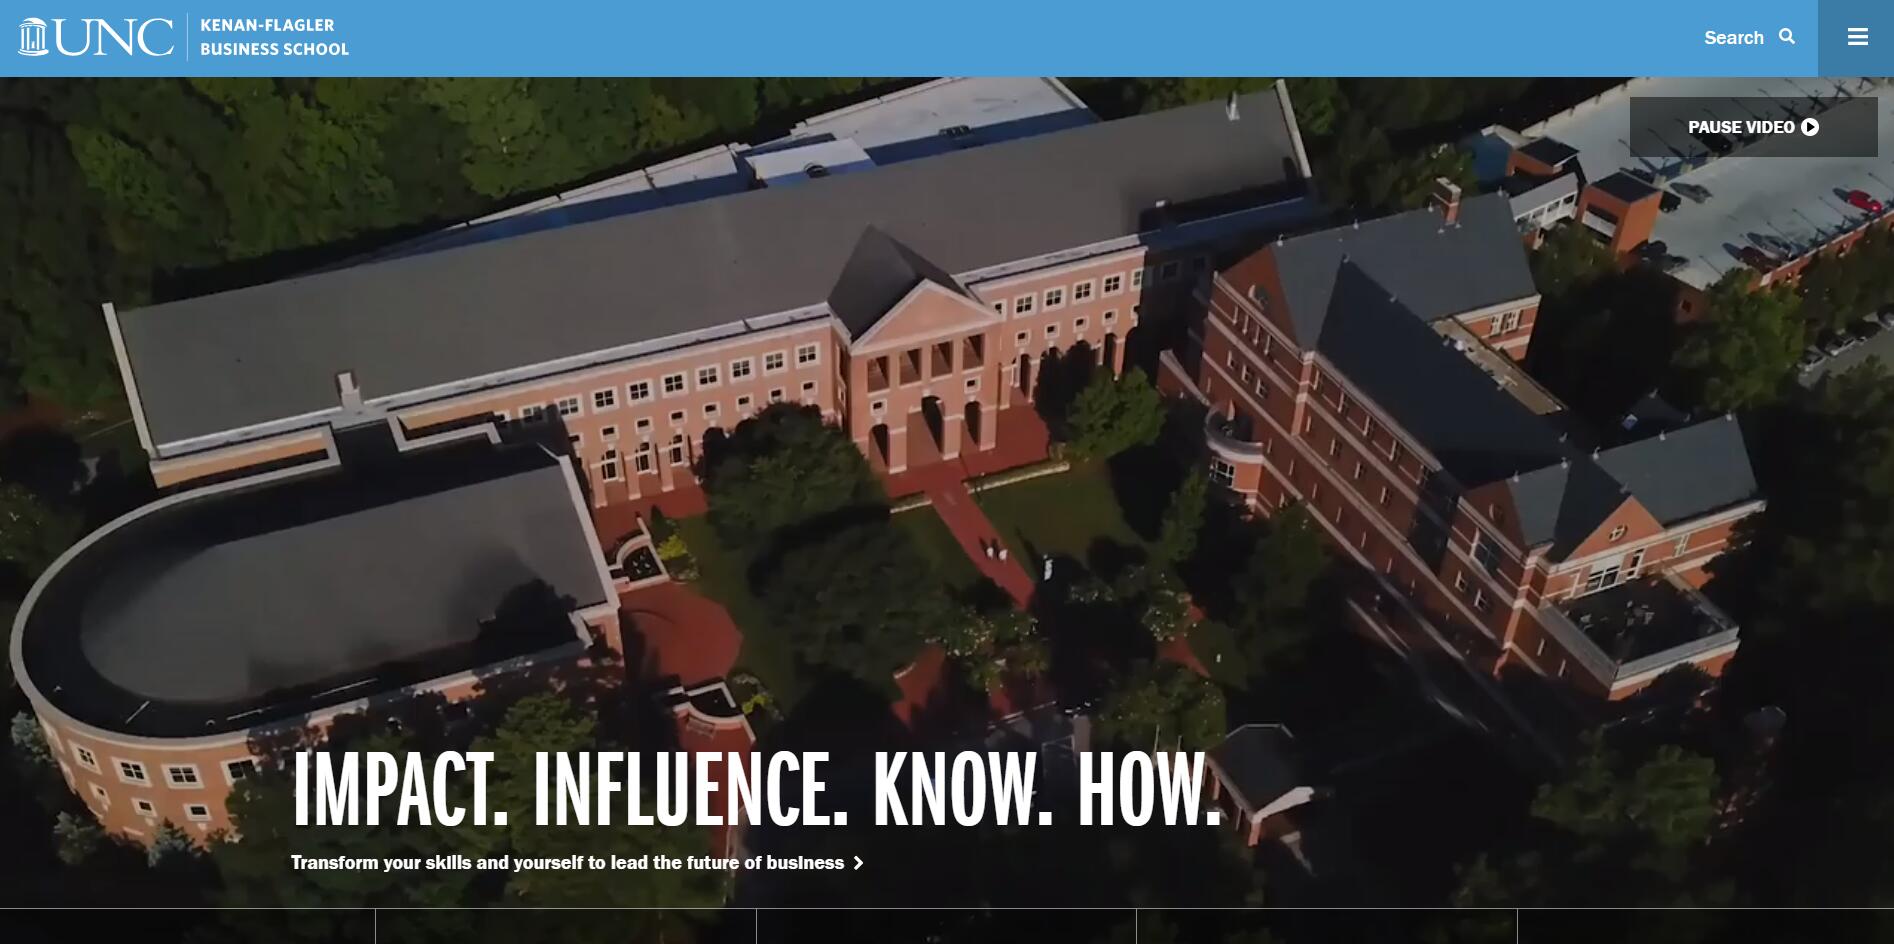 The Kenan-Flagler Business School at University of North Carolina--Chapel Hill